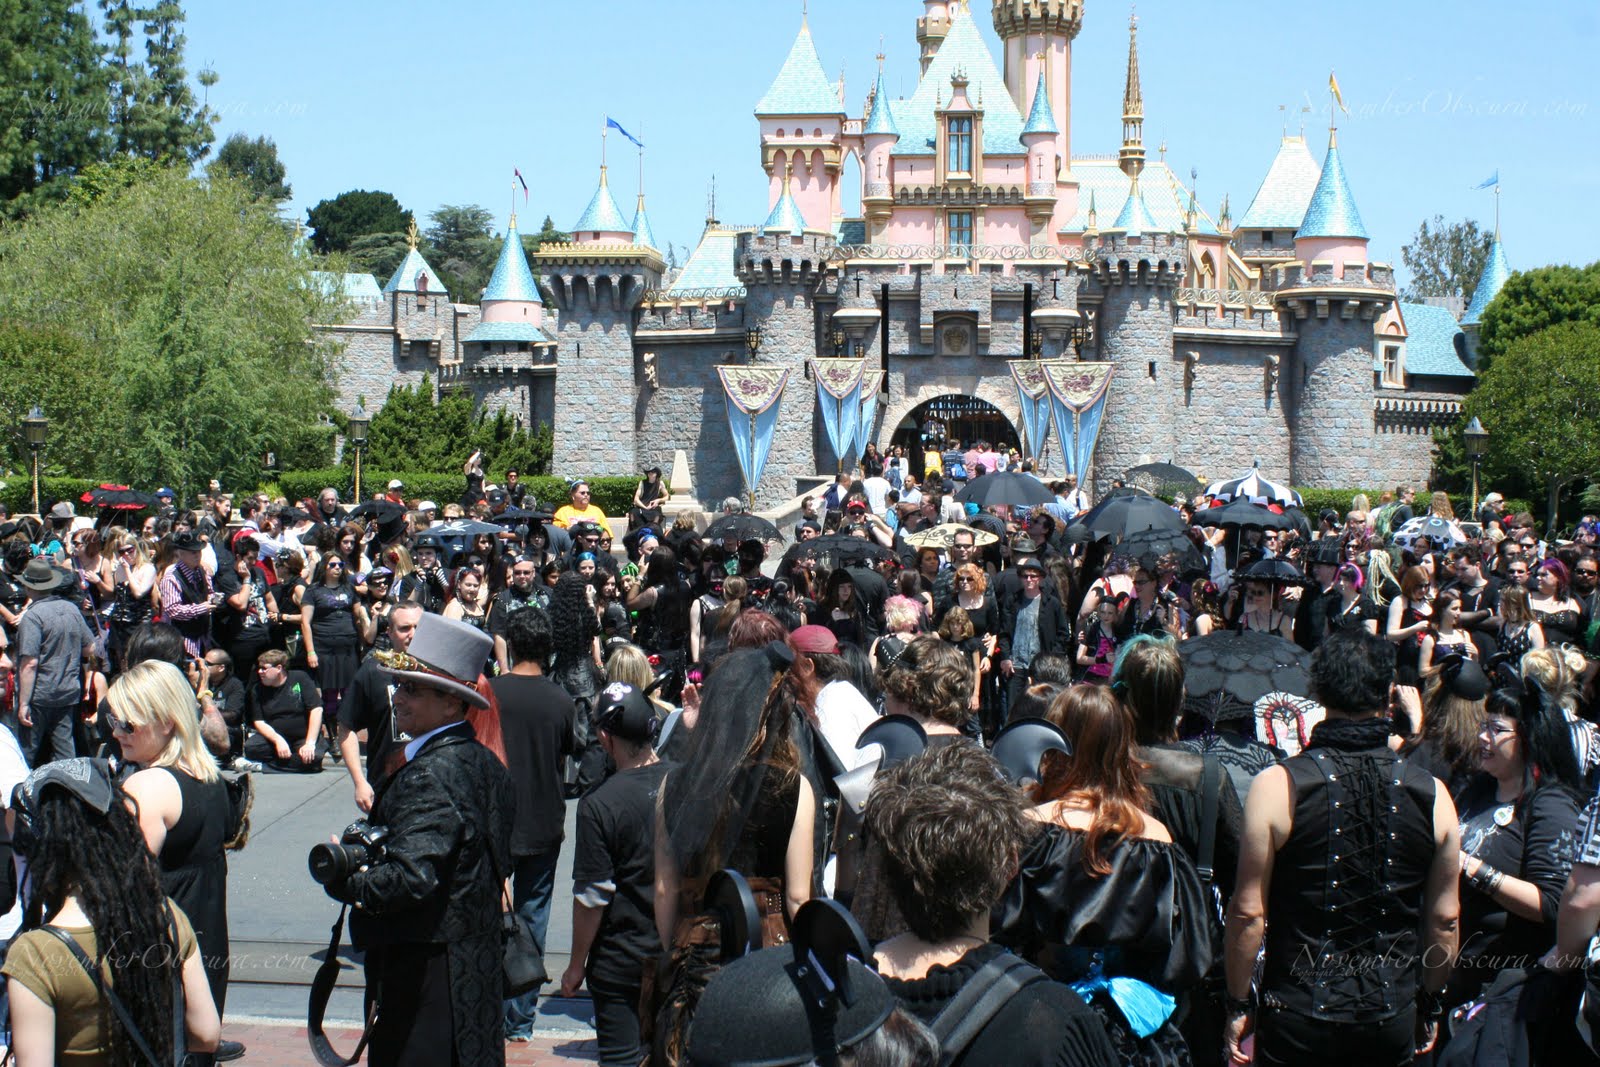 Gothic Tea Society Bats Day at Disneyland The People 2